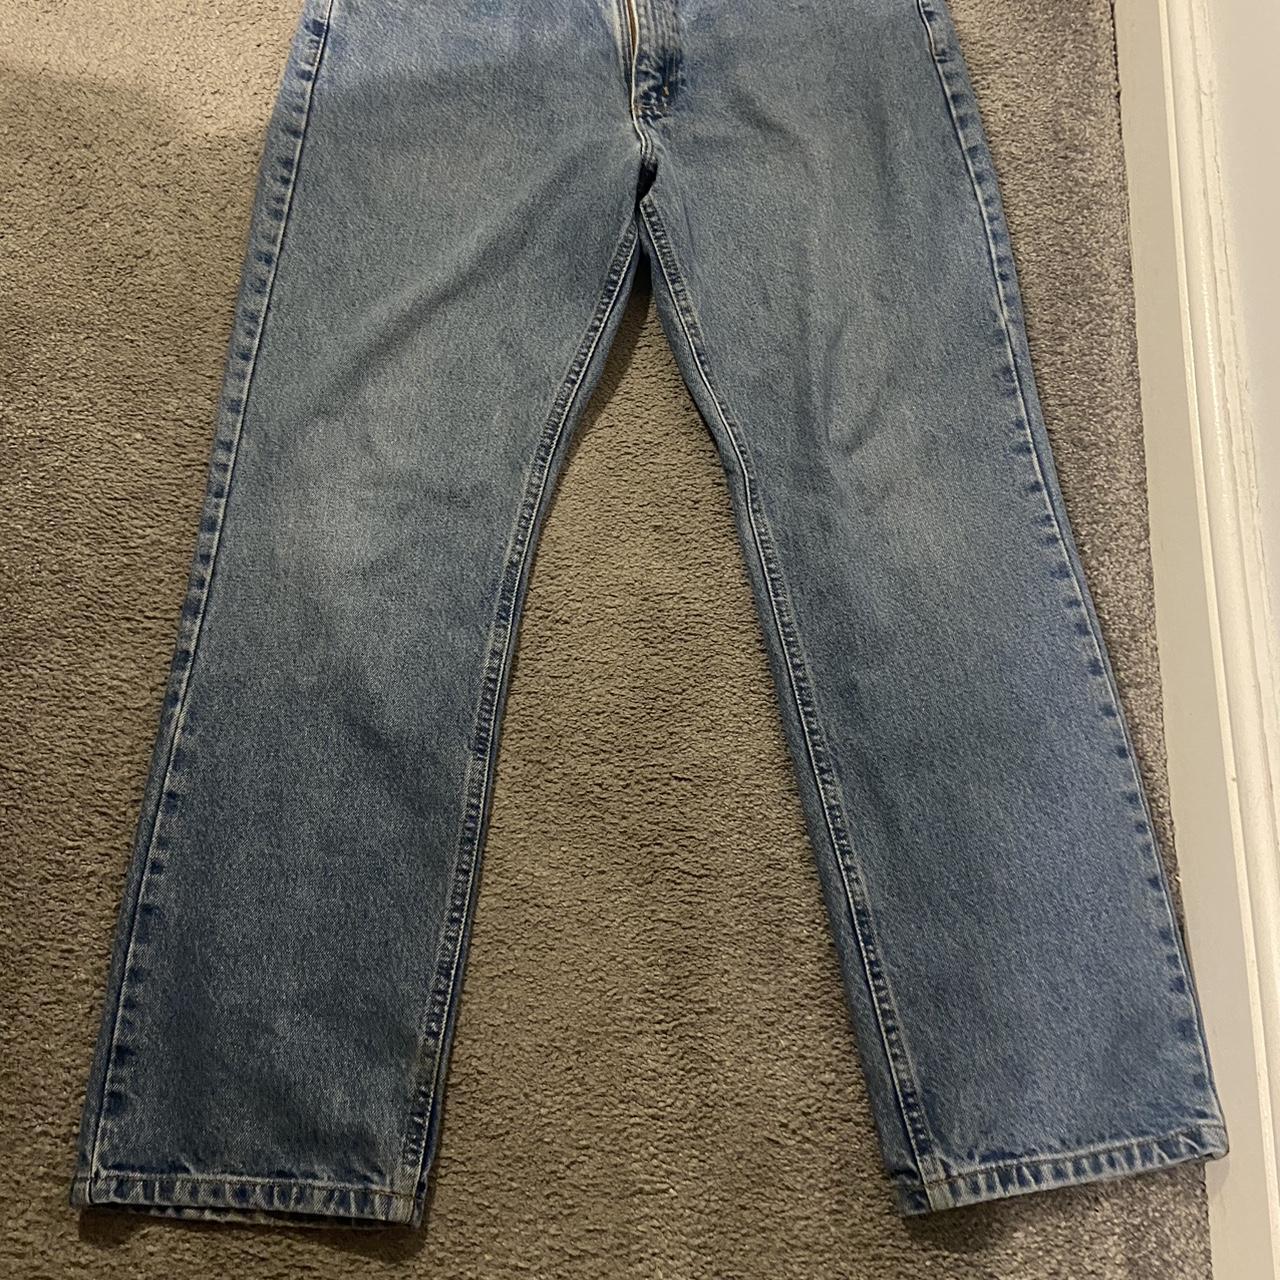 W36 L36 vintage carhartt jeans the pre-loved, aged... - Depop